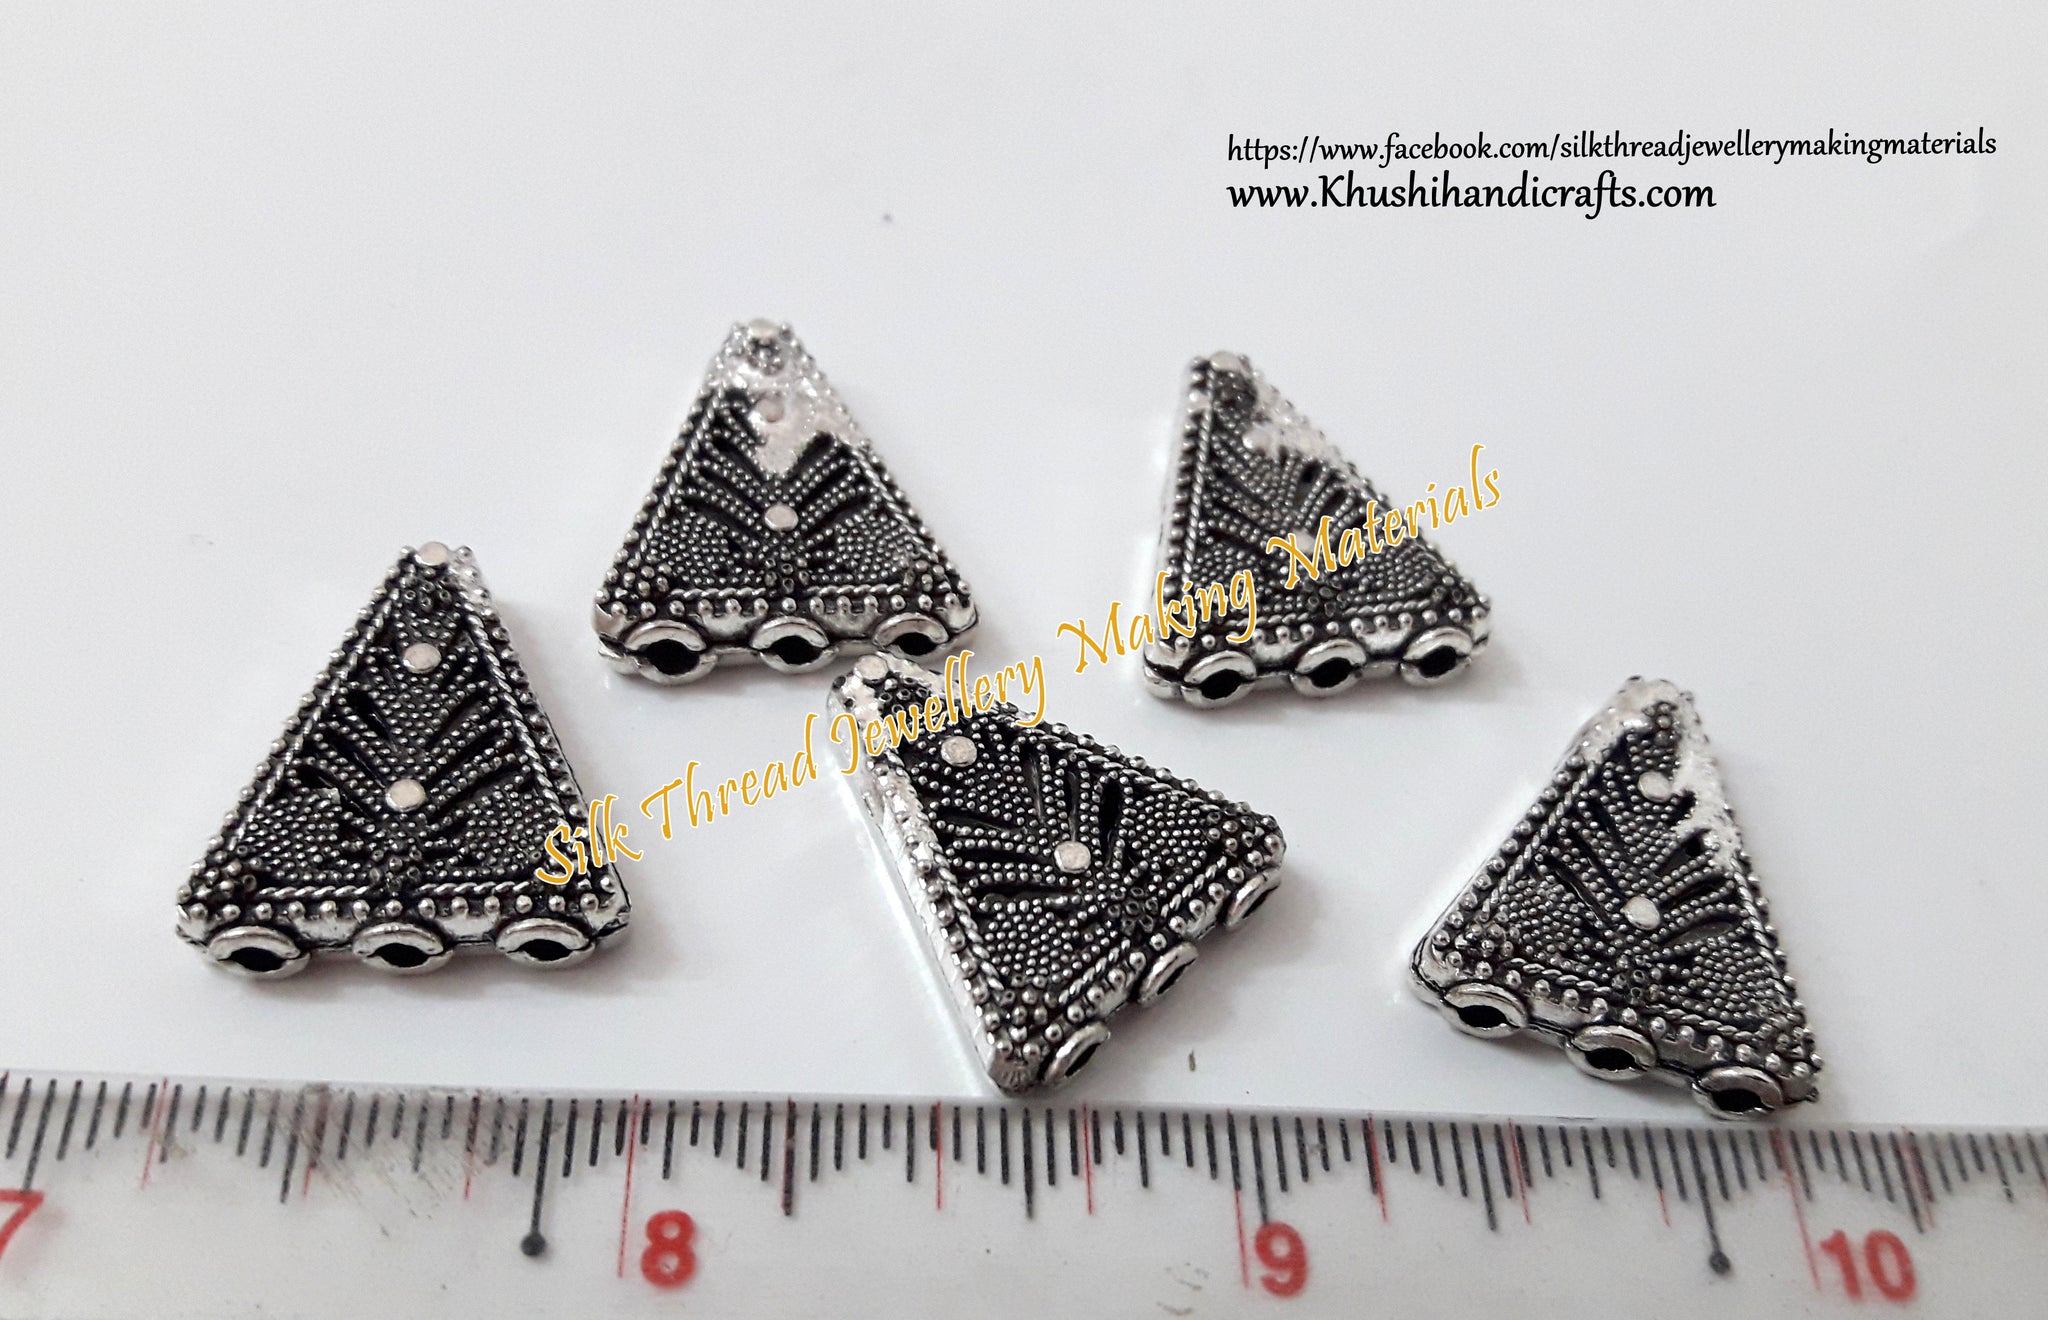 Triangular connectors